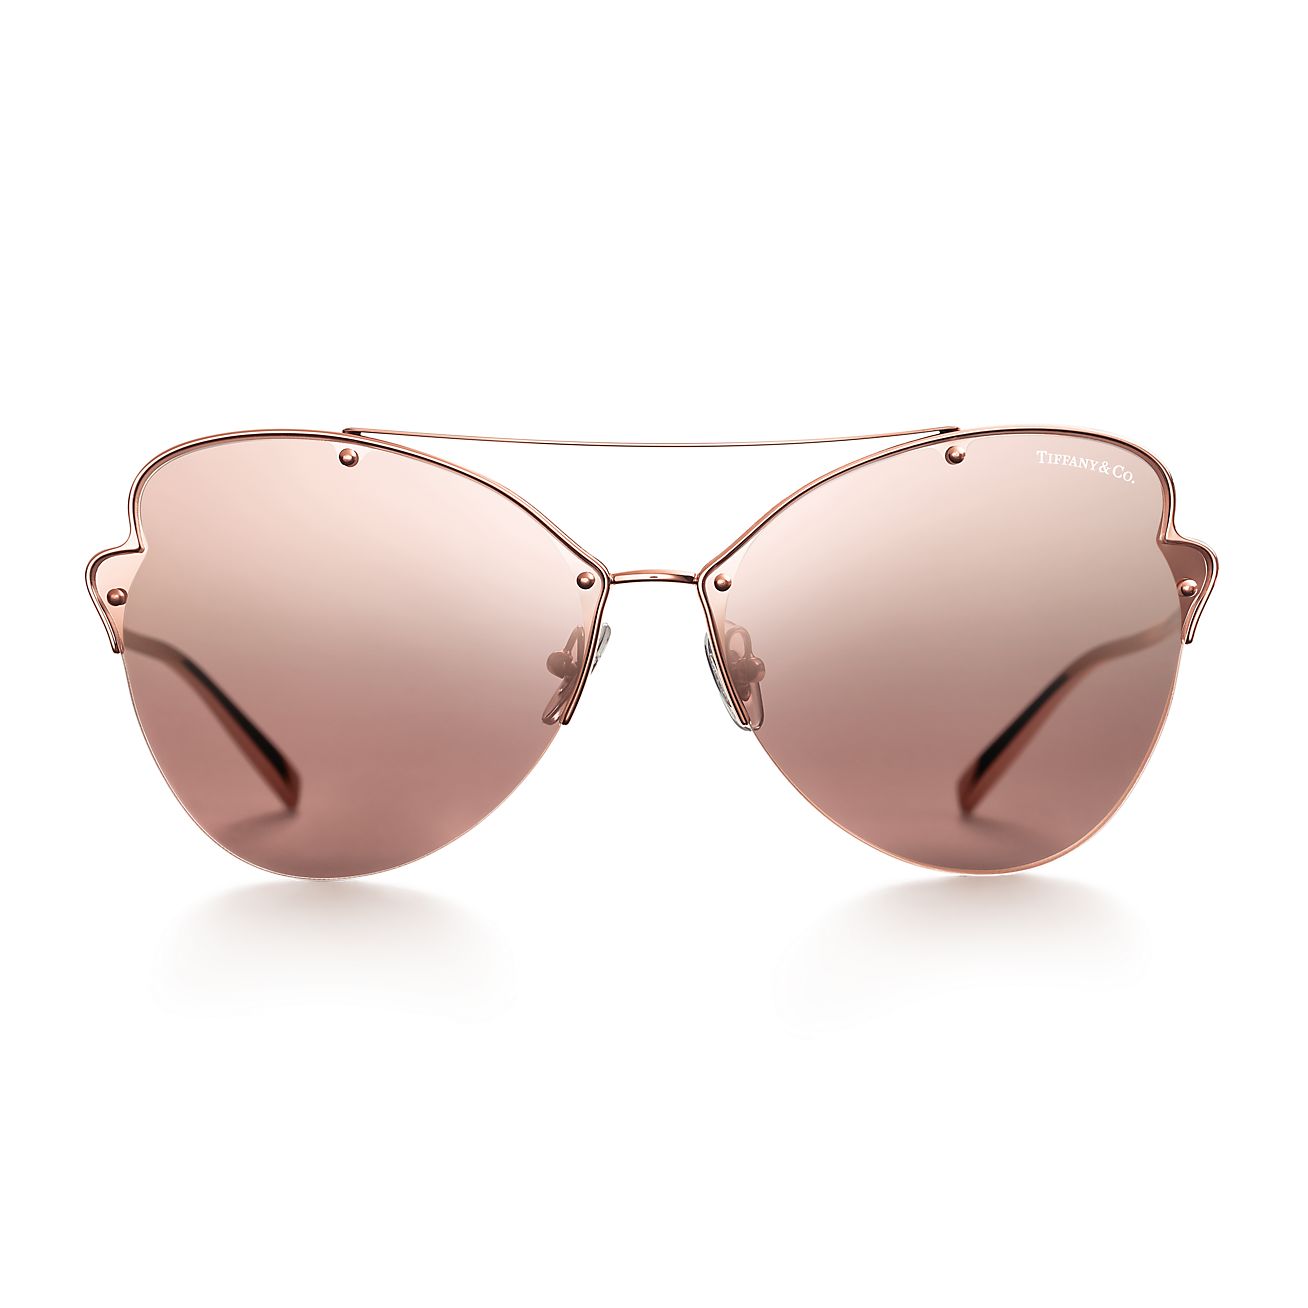 tiffany sunglasses rose gold